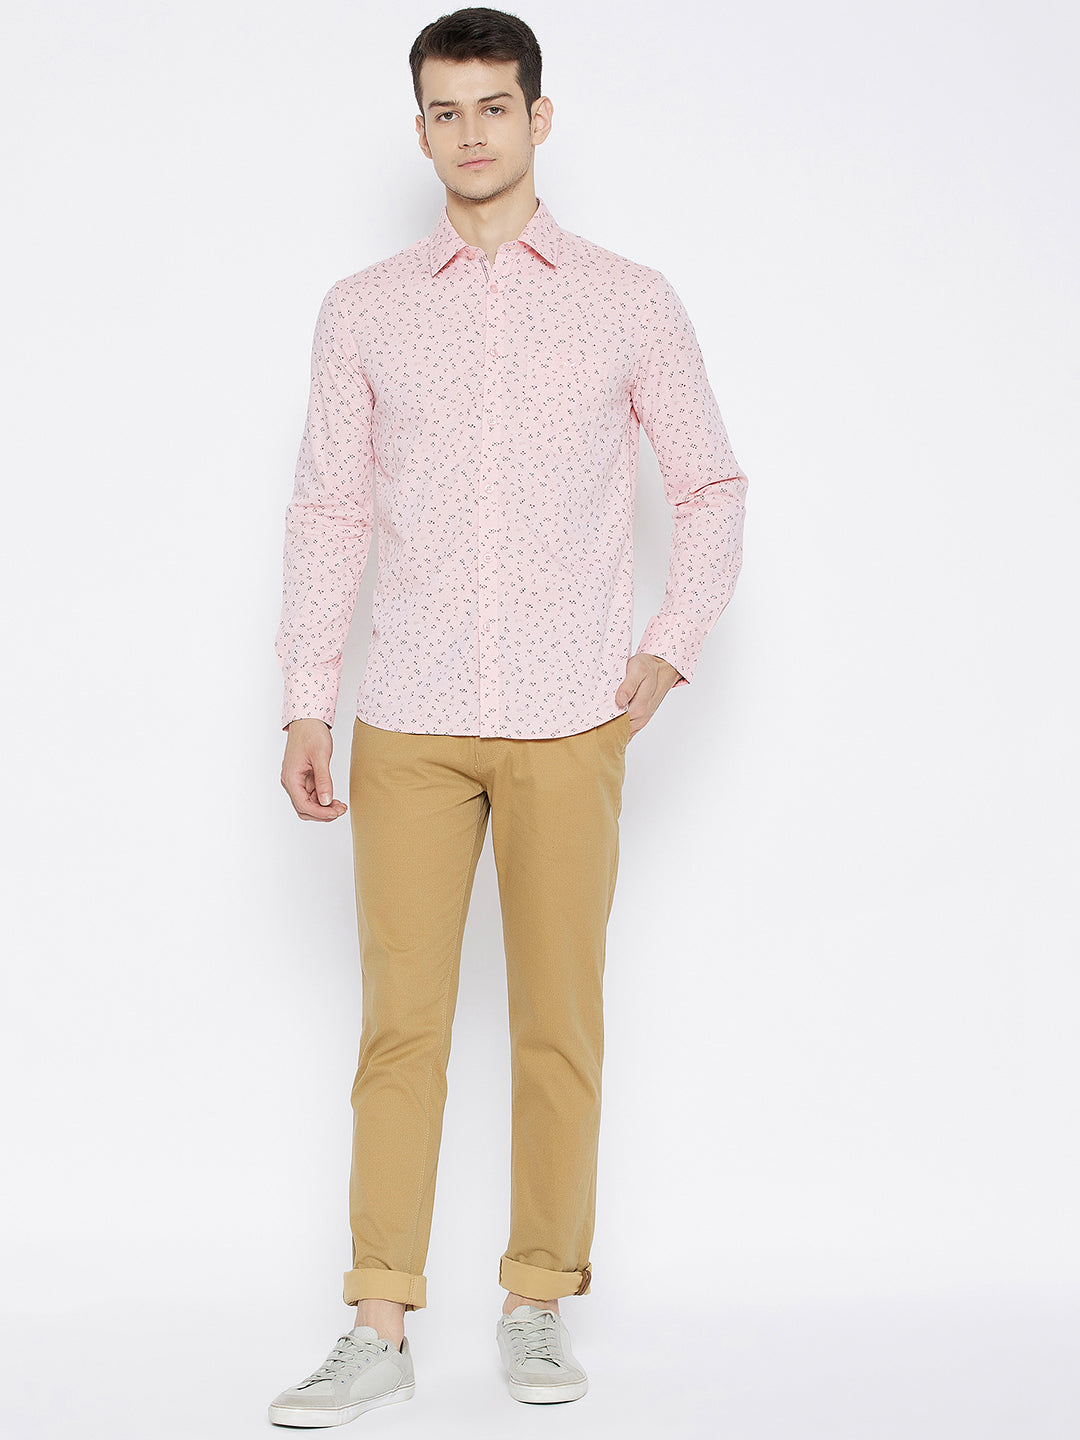 Pink Printed Slim Fit shirt - Men Shirts